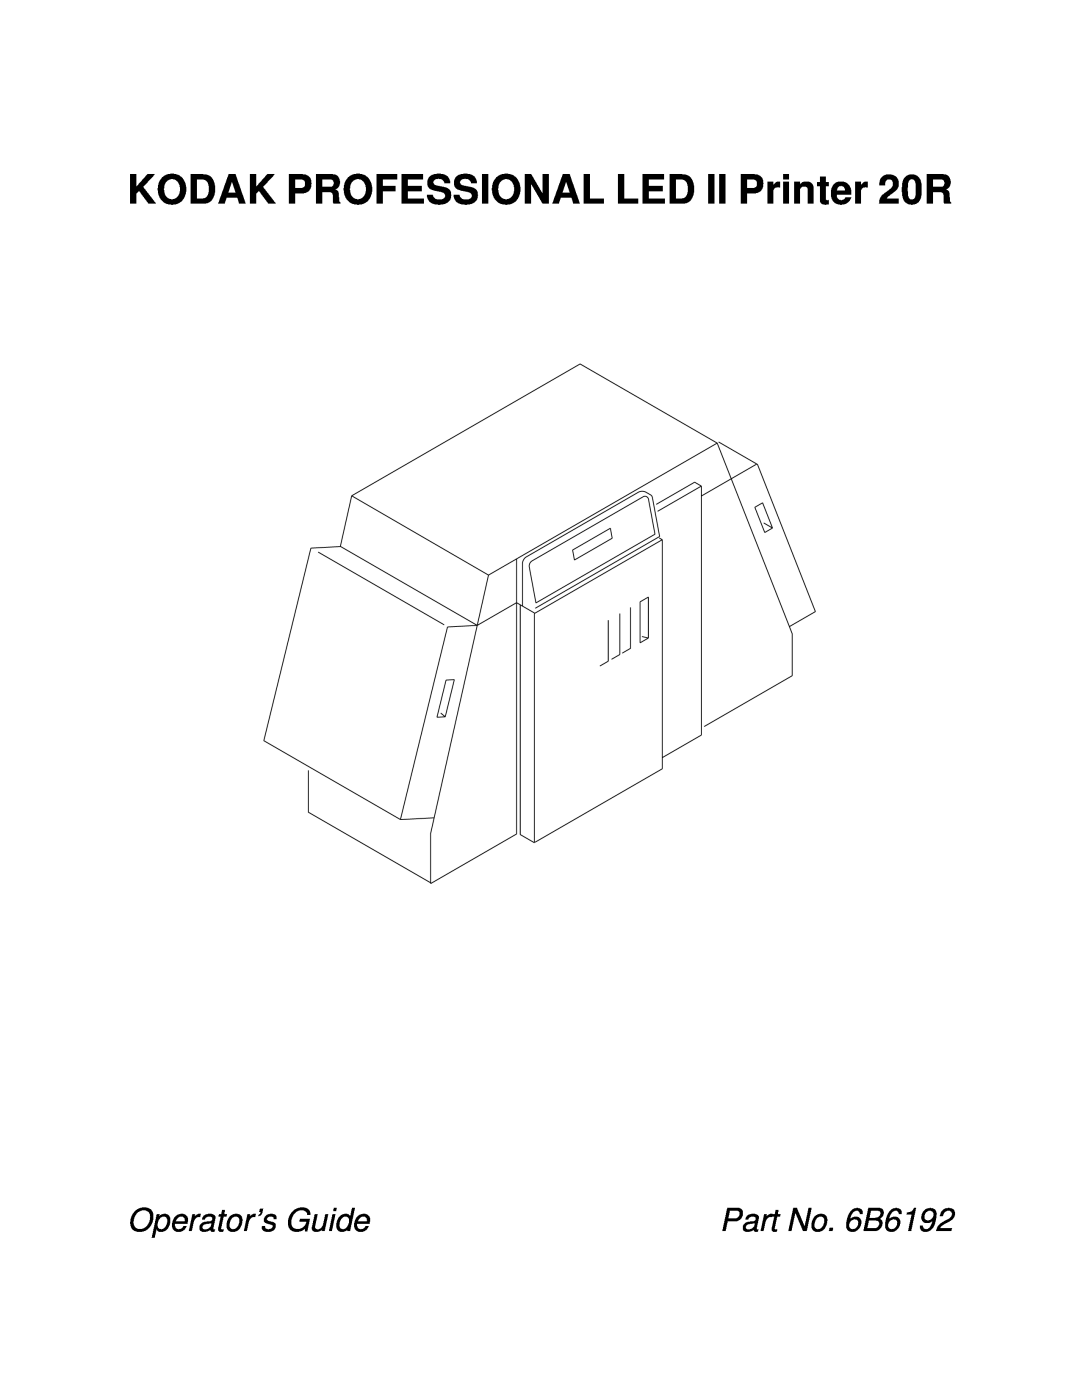 Kodak manual KODAK PROFESSIONAL LED II Printer 20R, Operator’s Guide, Part No. 6B6192 